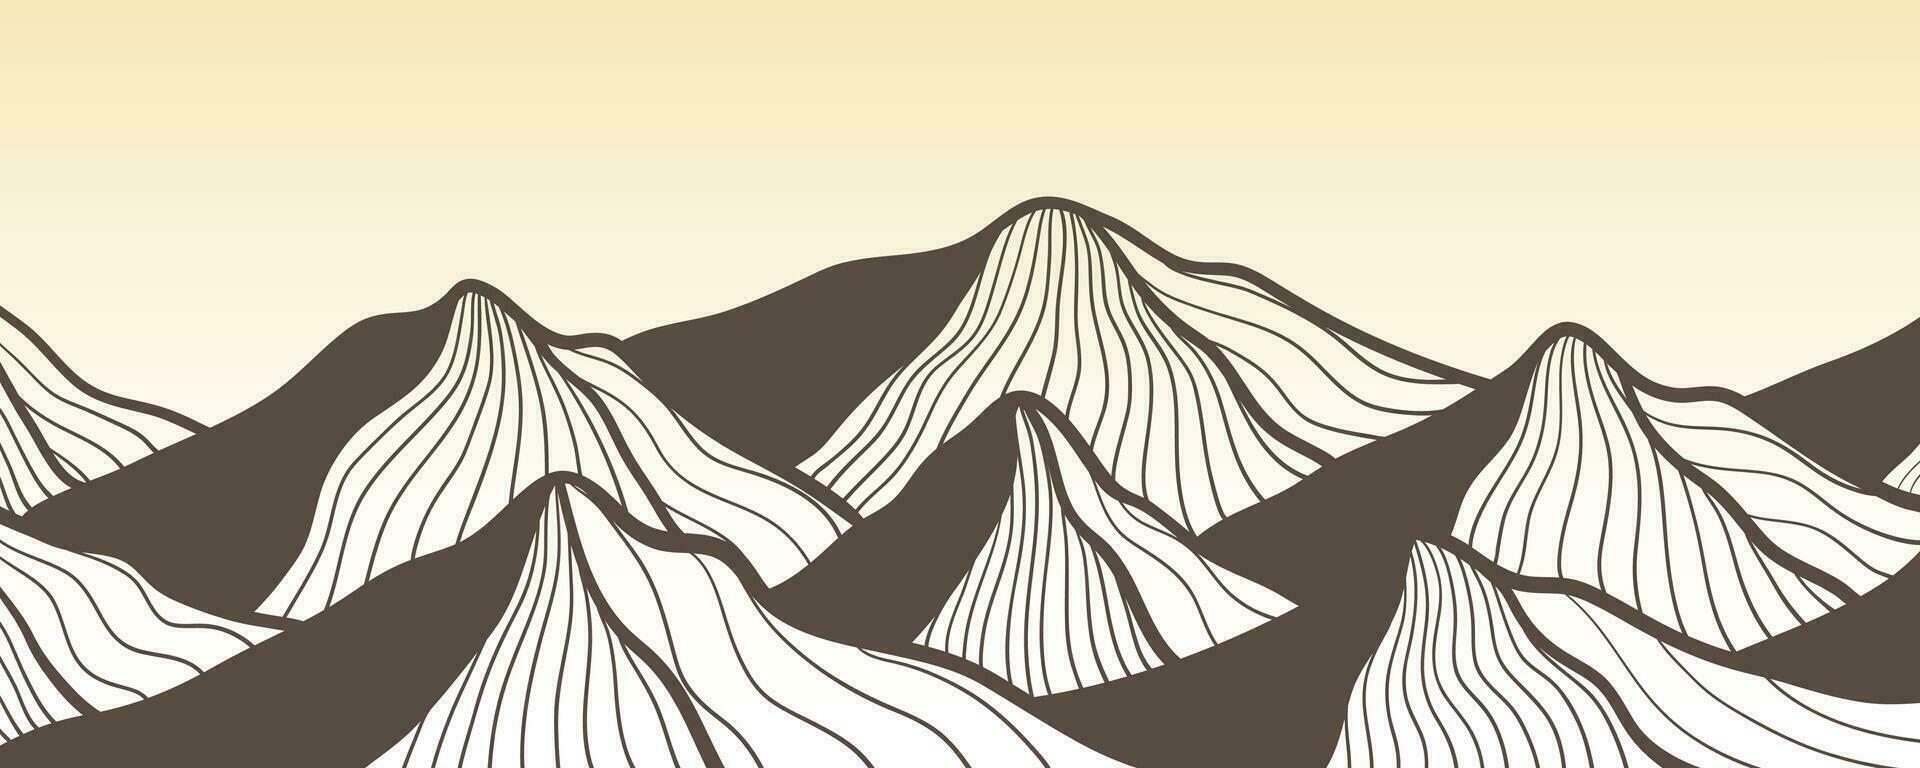 japansk bakgrund med linje vågmönster vektor. abstrakt mall med geometriska mönster. berg layout design i orientalisk stil. vektor